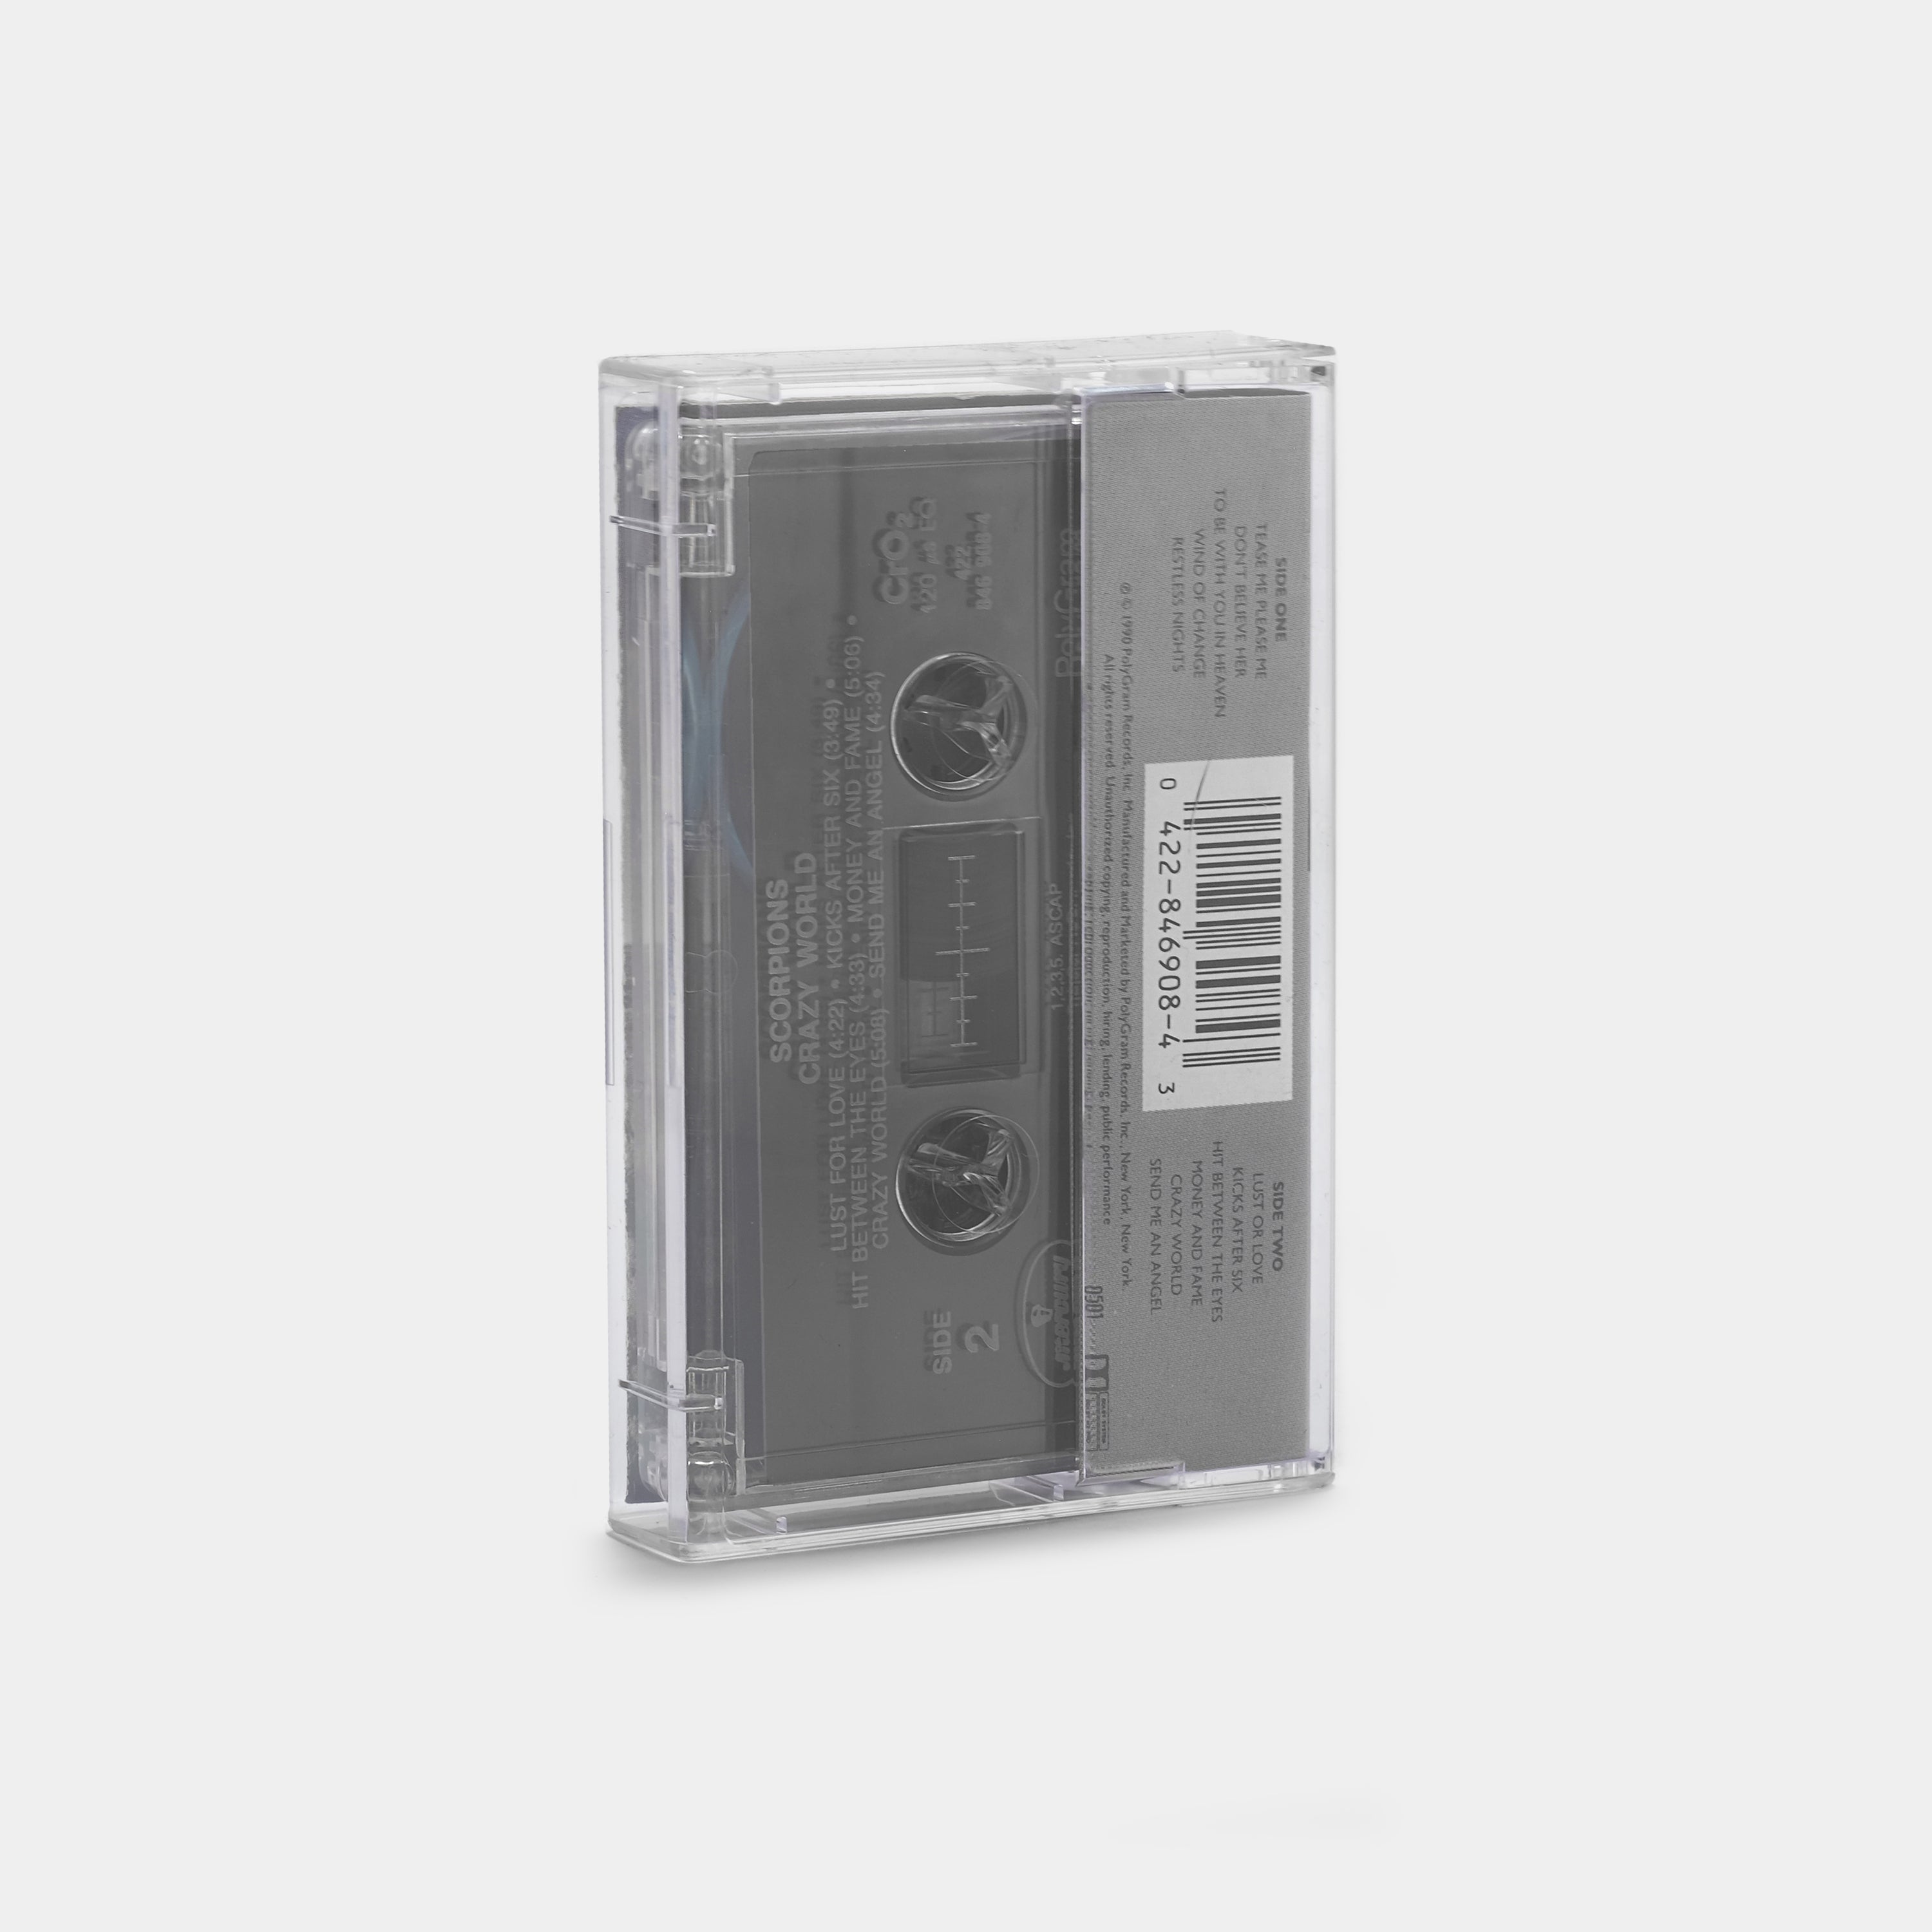 Scorpions - Crazy World Cassette Tape